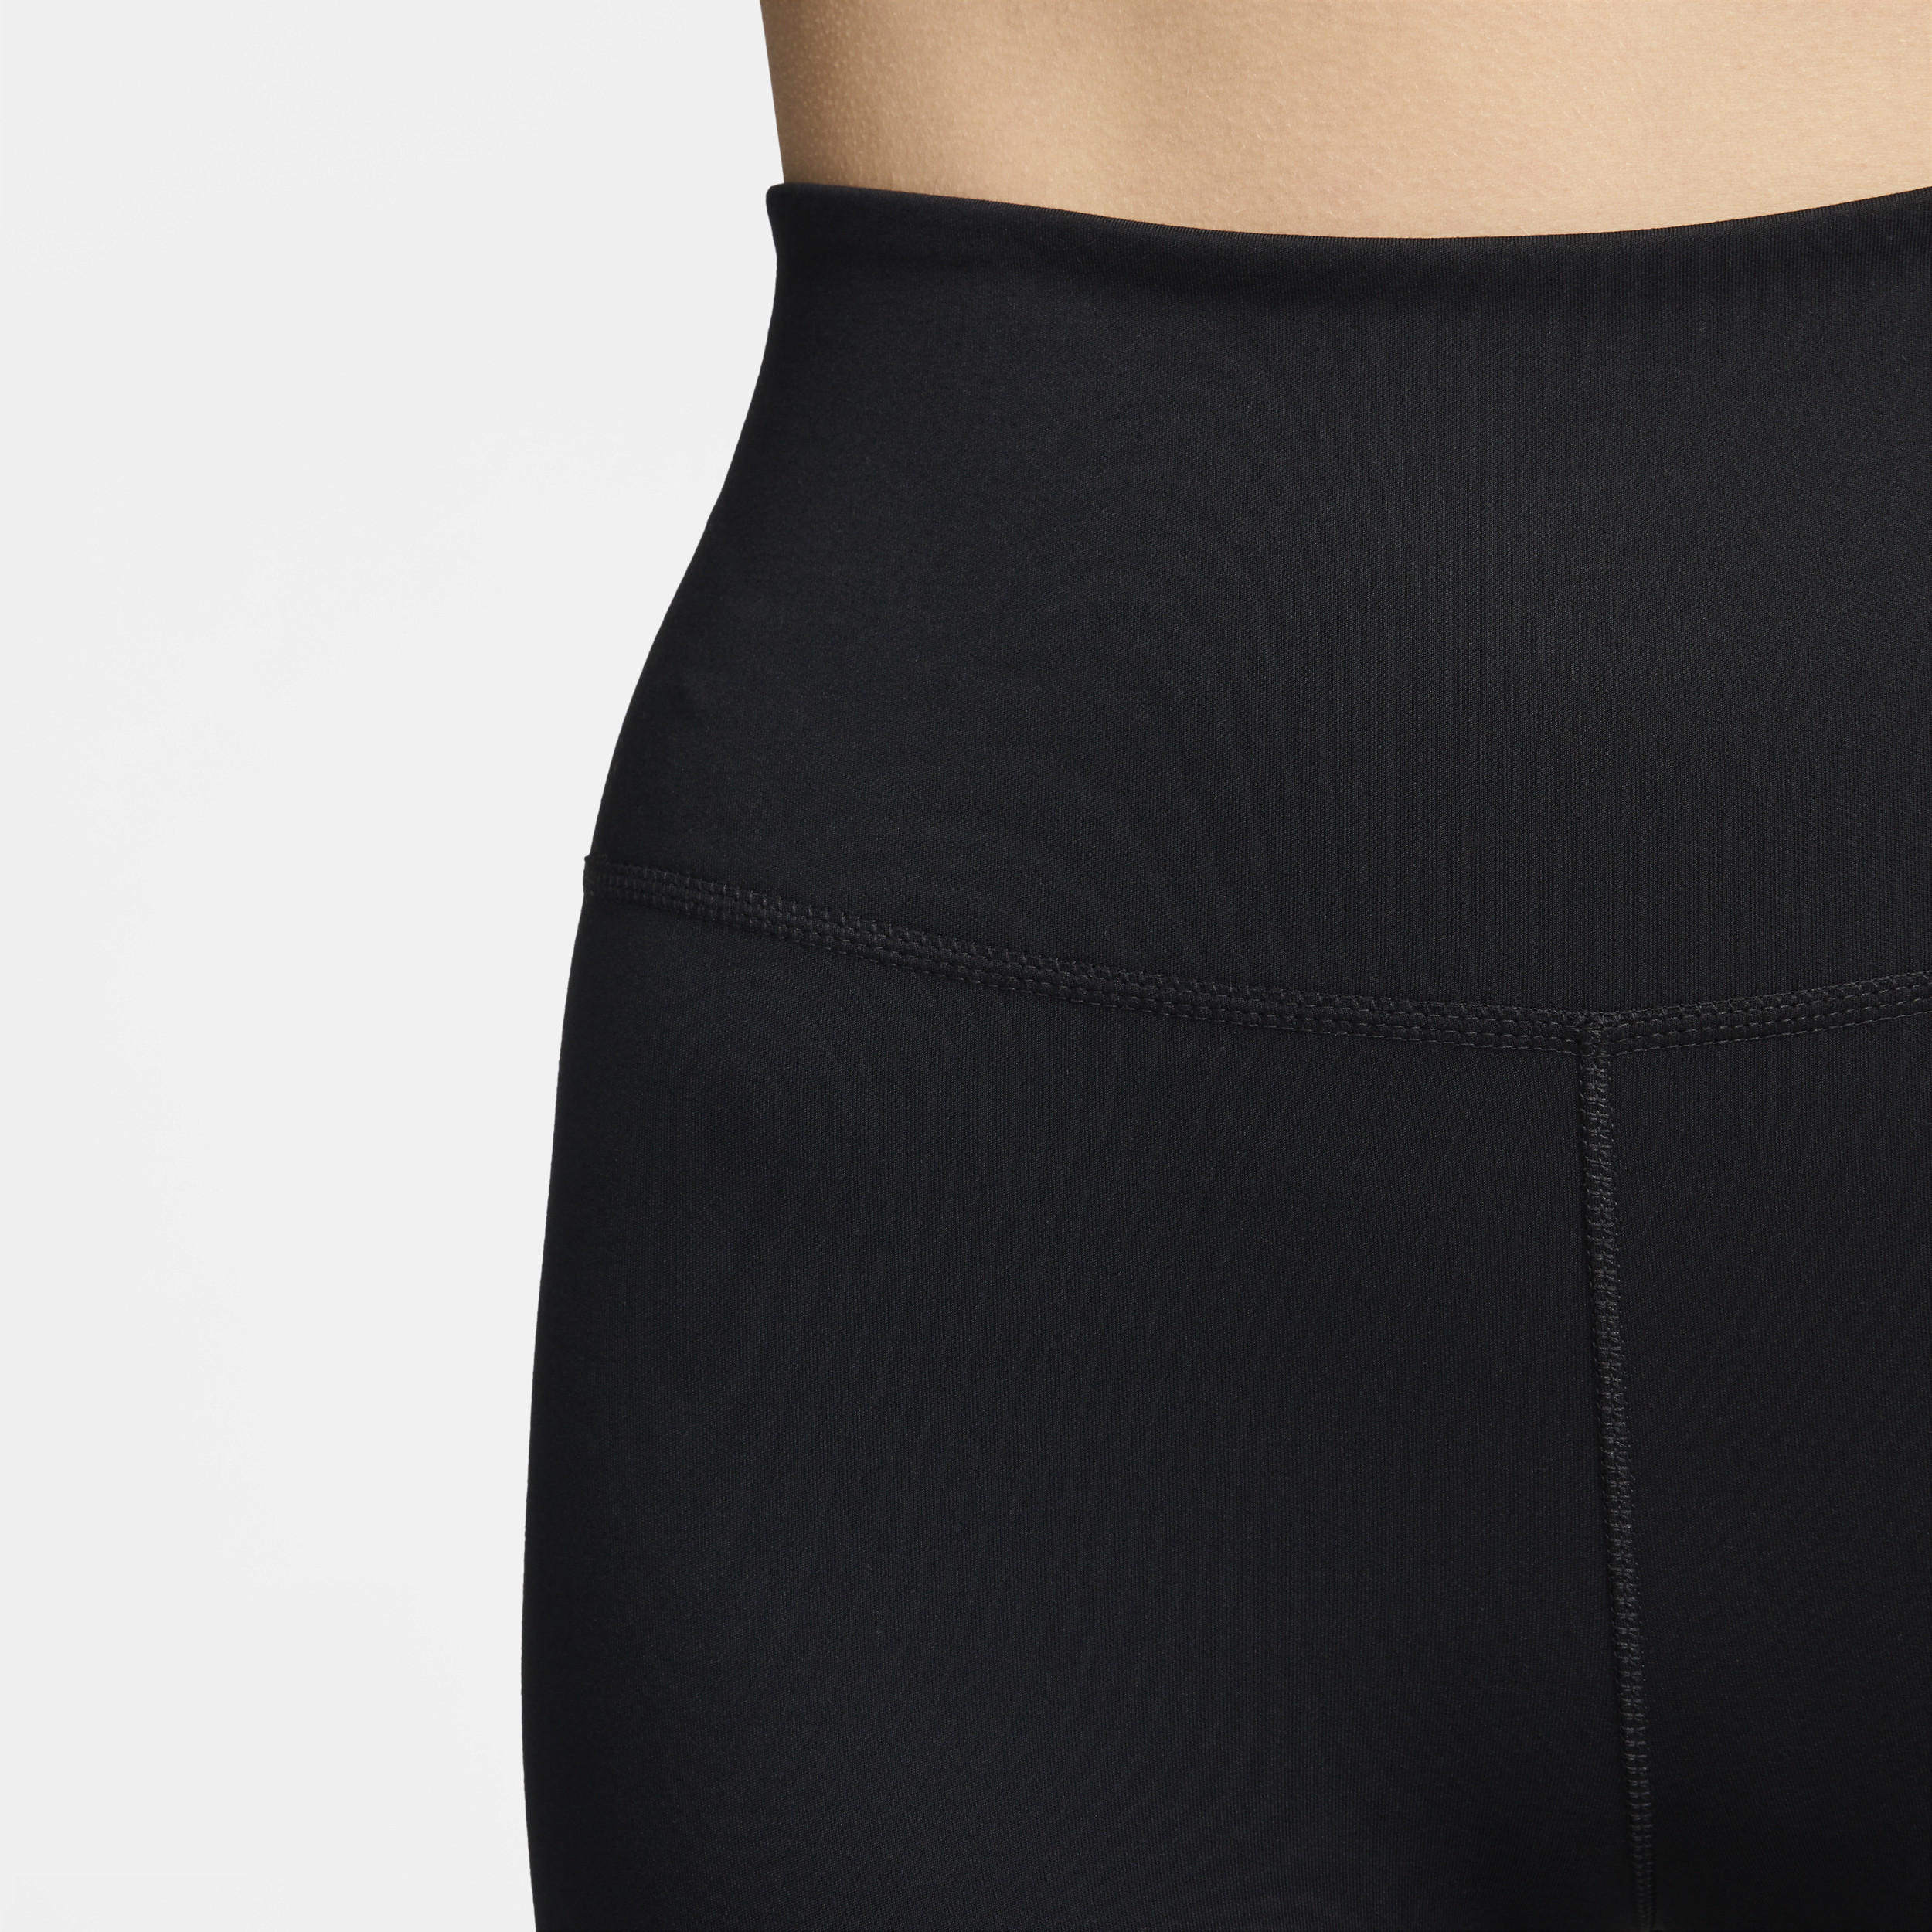 Nike One lange legging met hoge taille voor dames Zwart